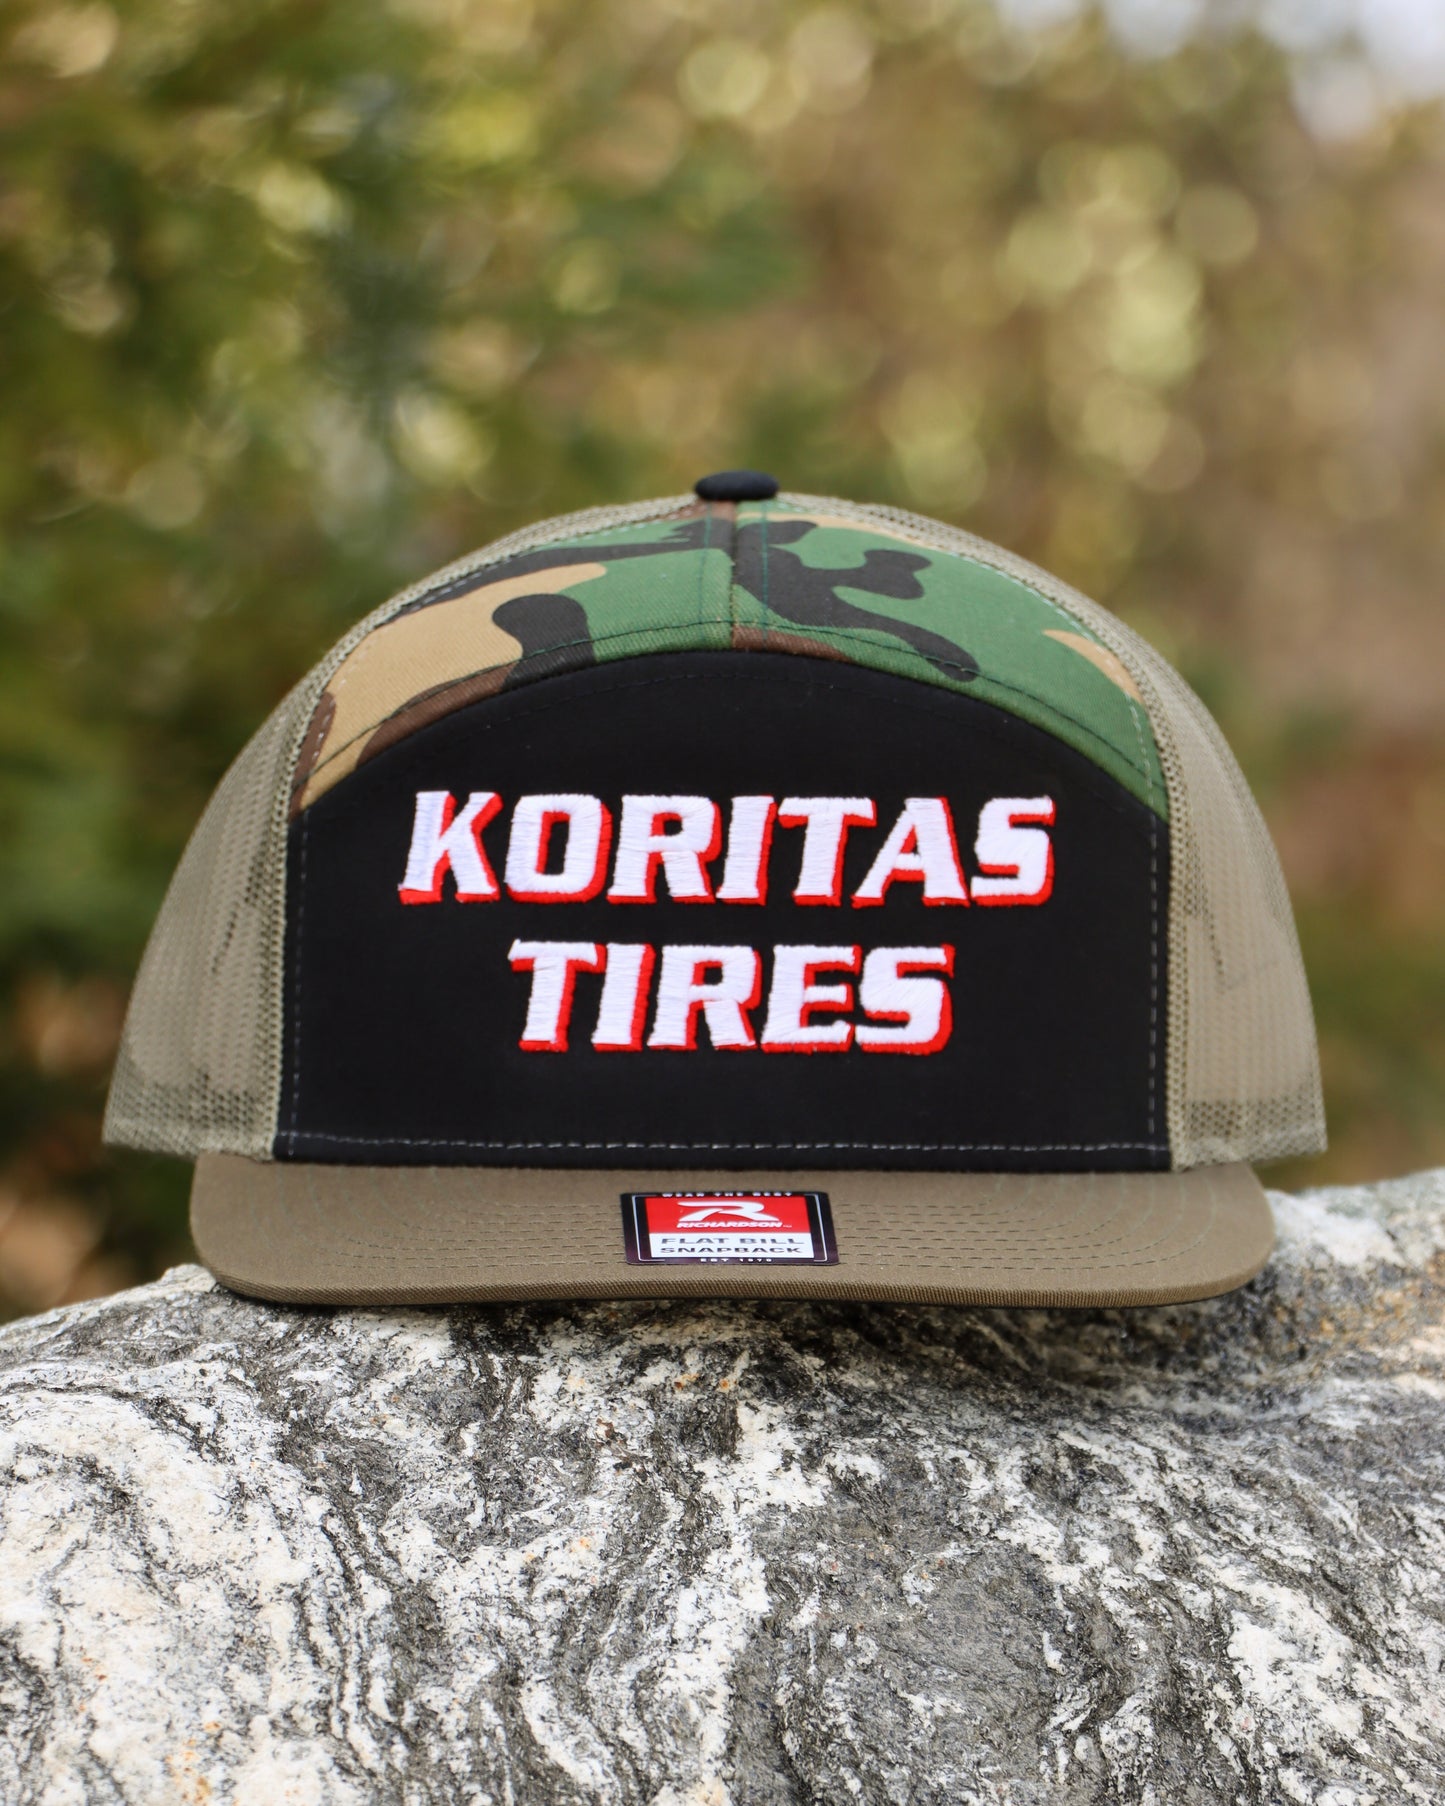 Koritas Tires 7 panel trucker hat sitting on a rock.